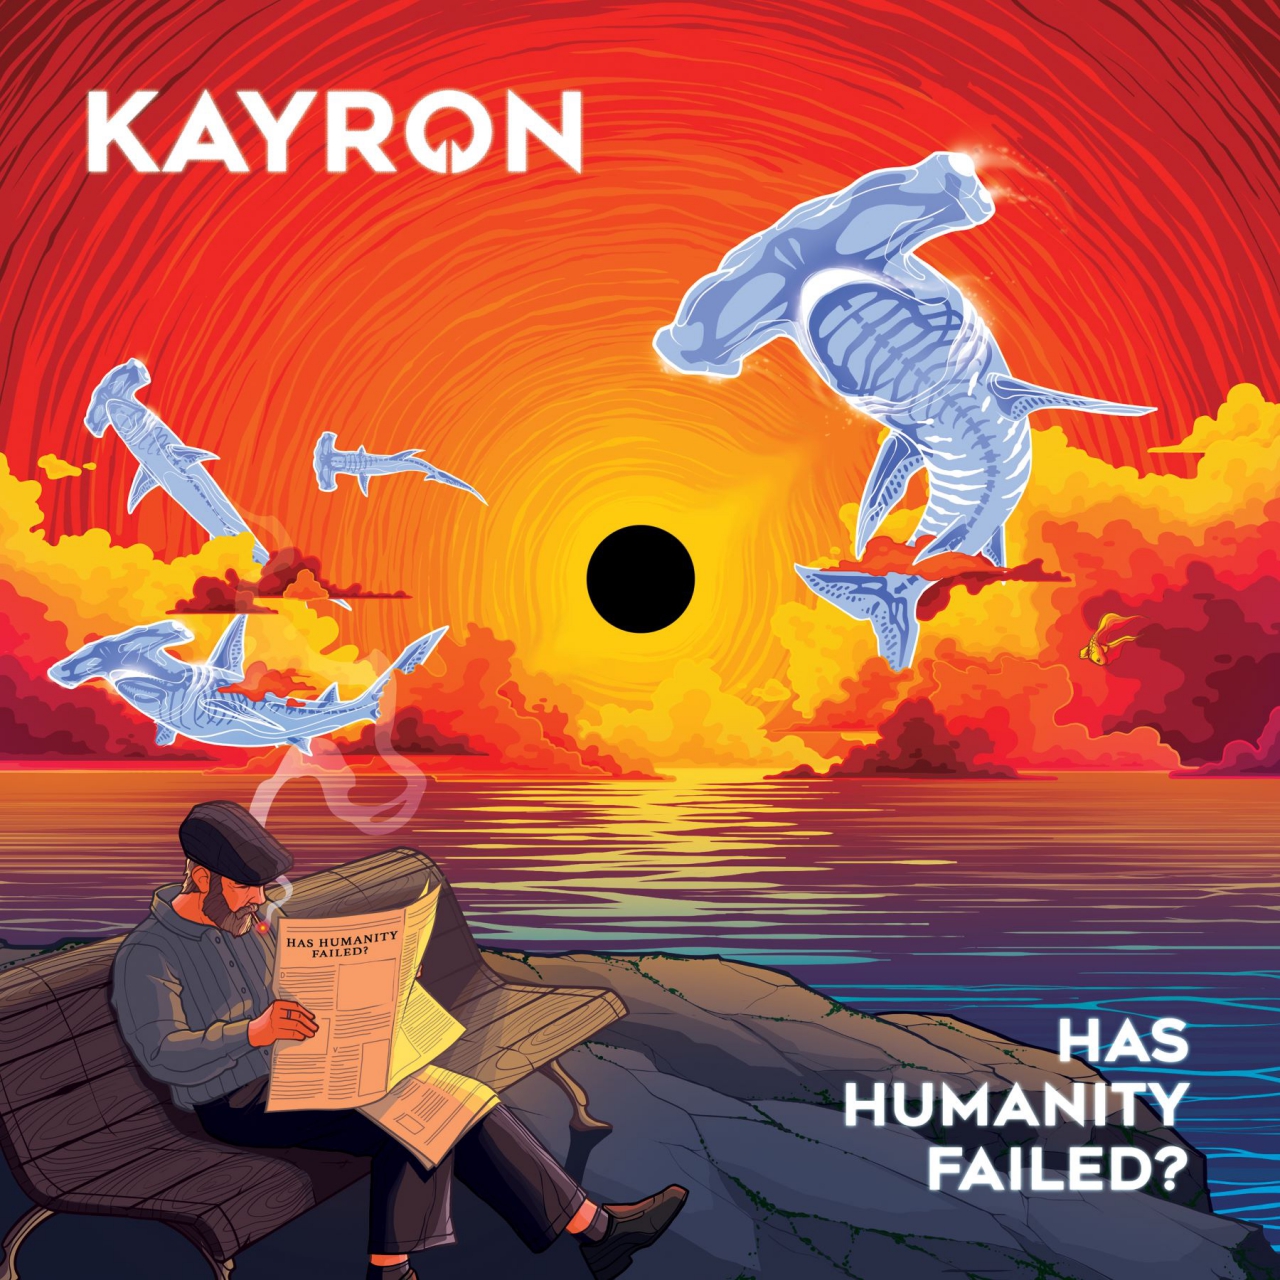 Kayron - "Has Humanity Failed?”